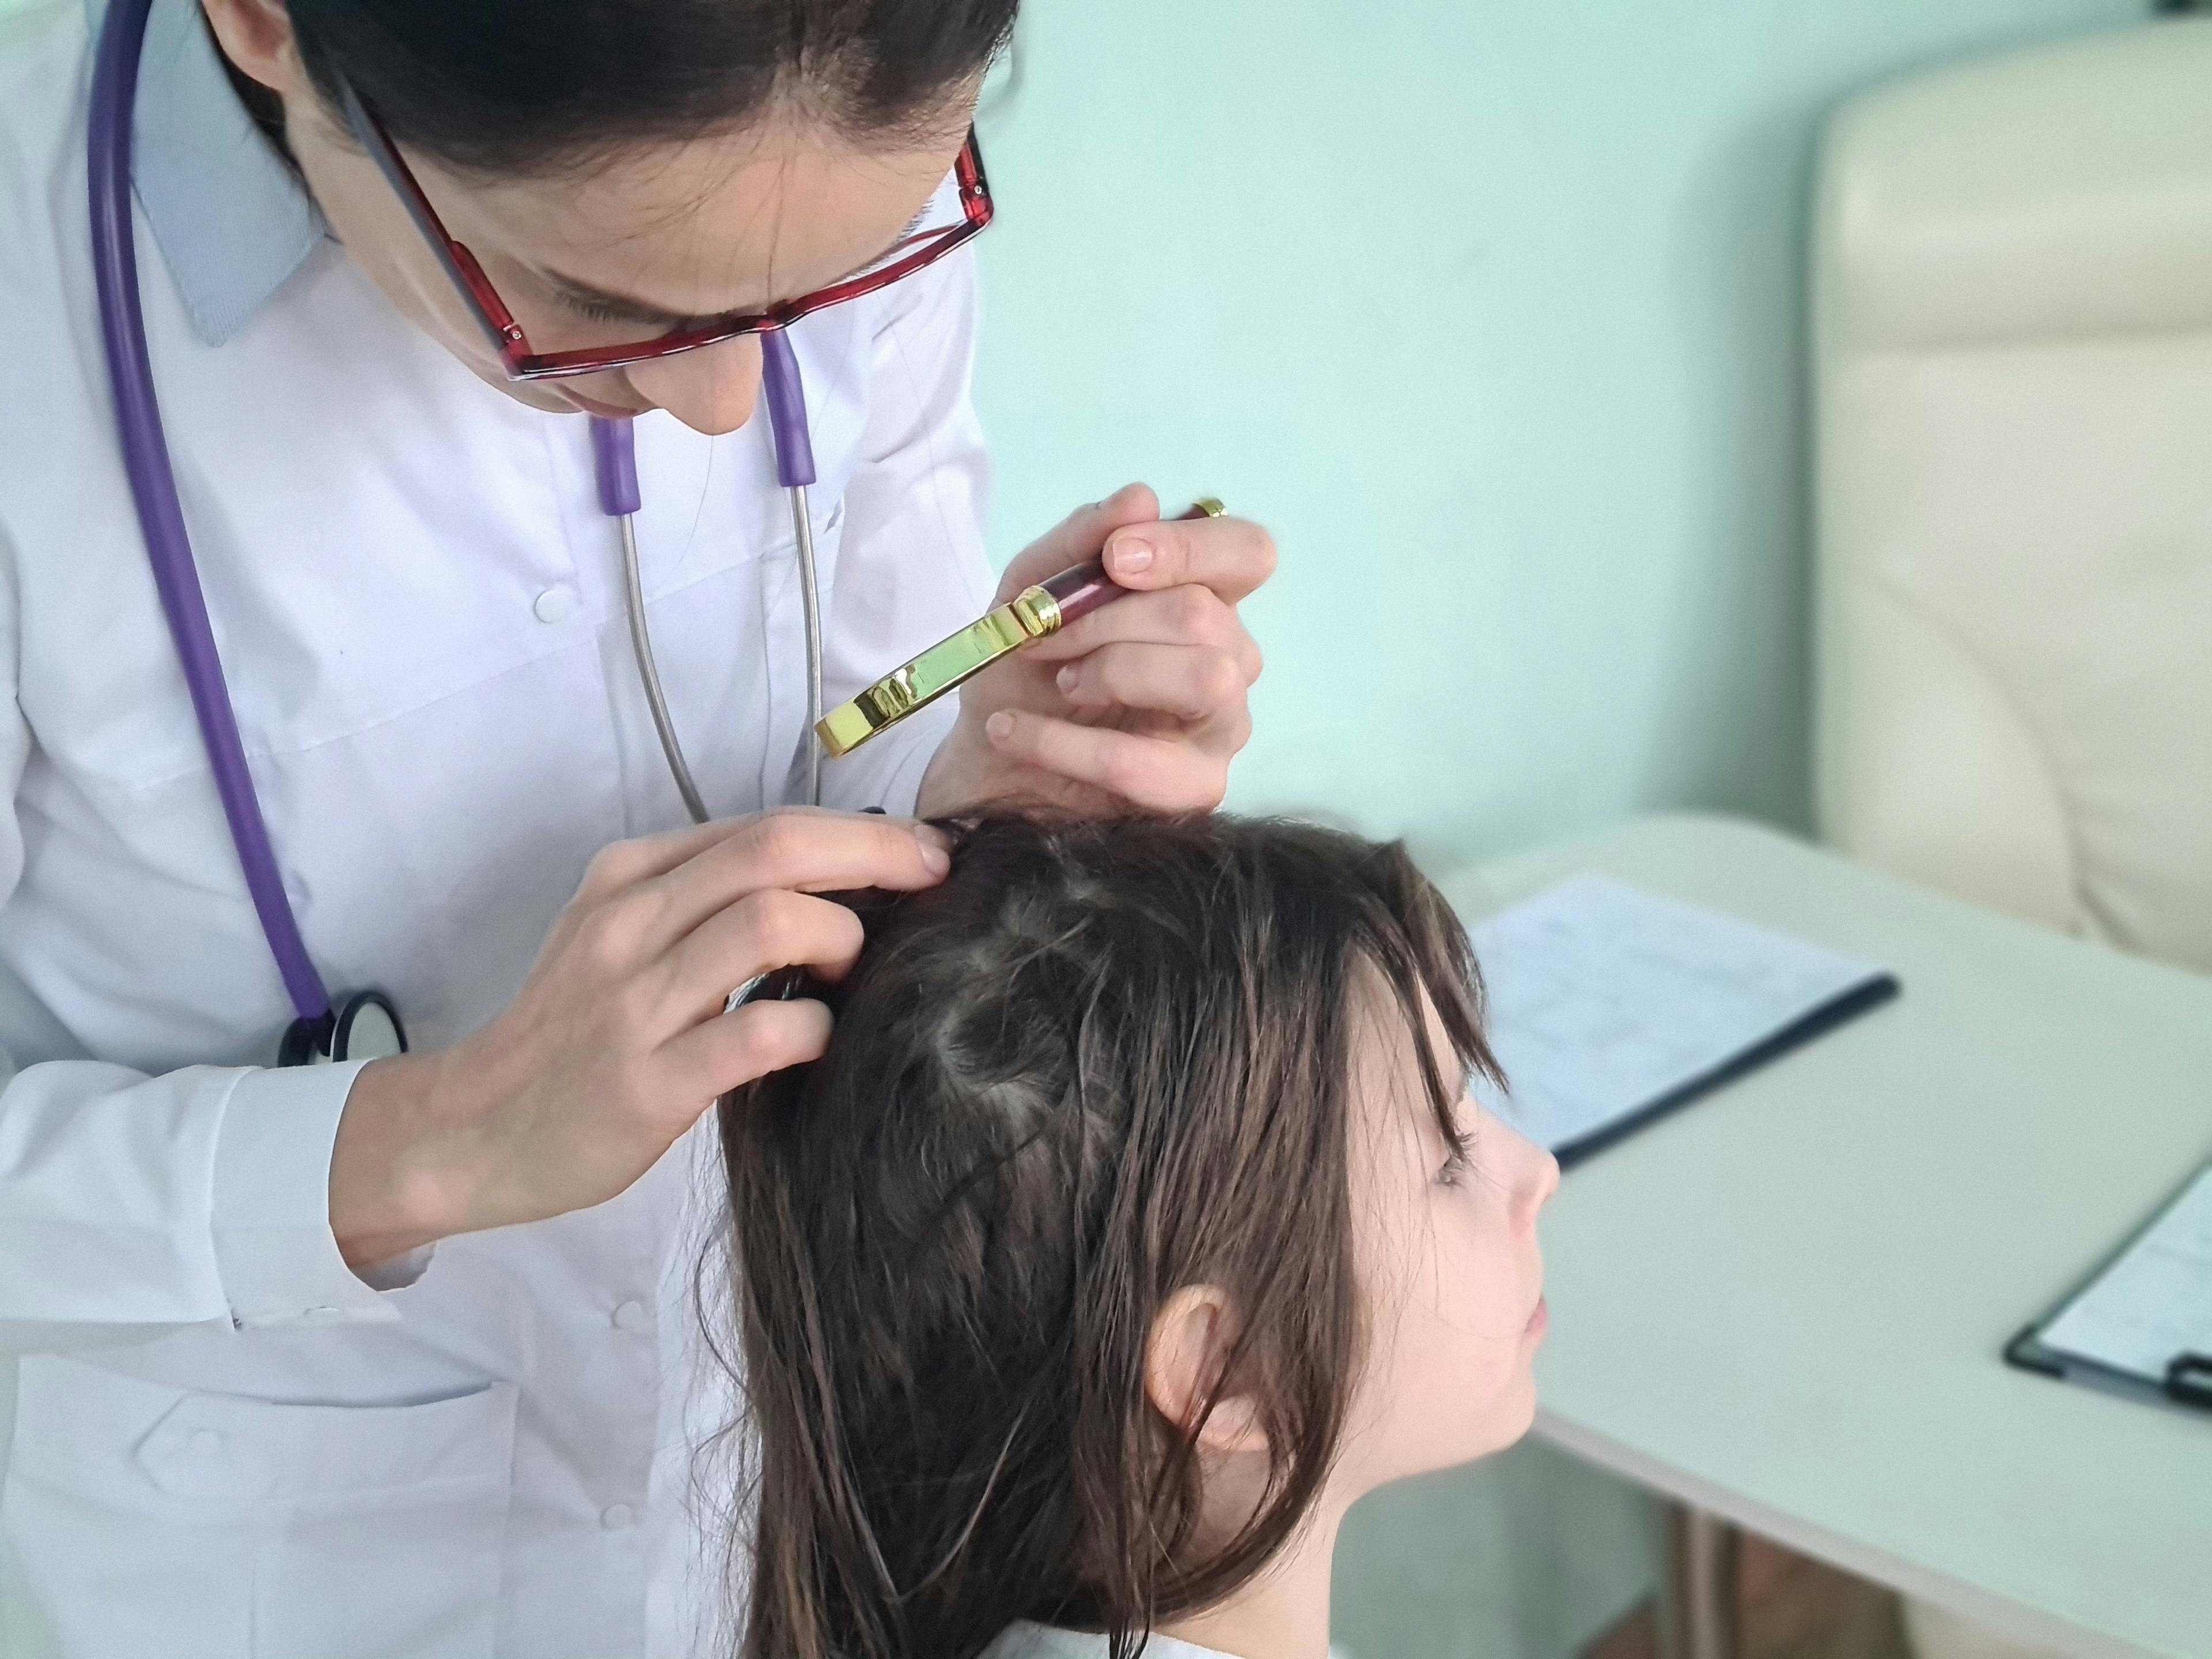 Doctor examines child scalp. | Image Credit: Nadzeya - stock.adobe.com